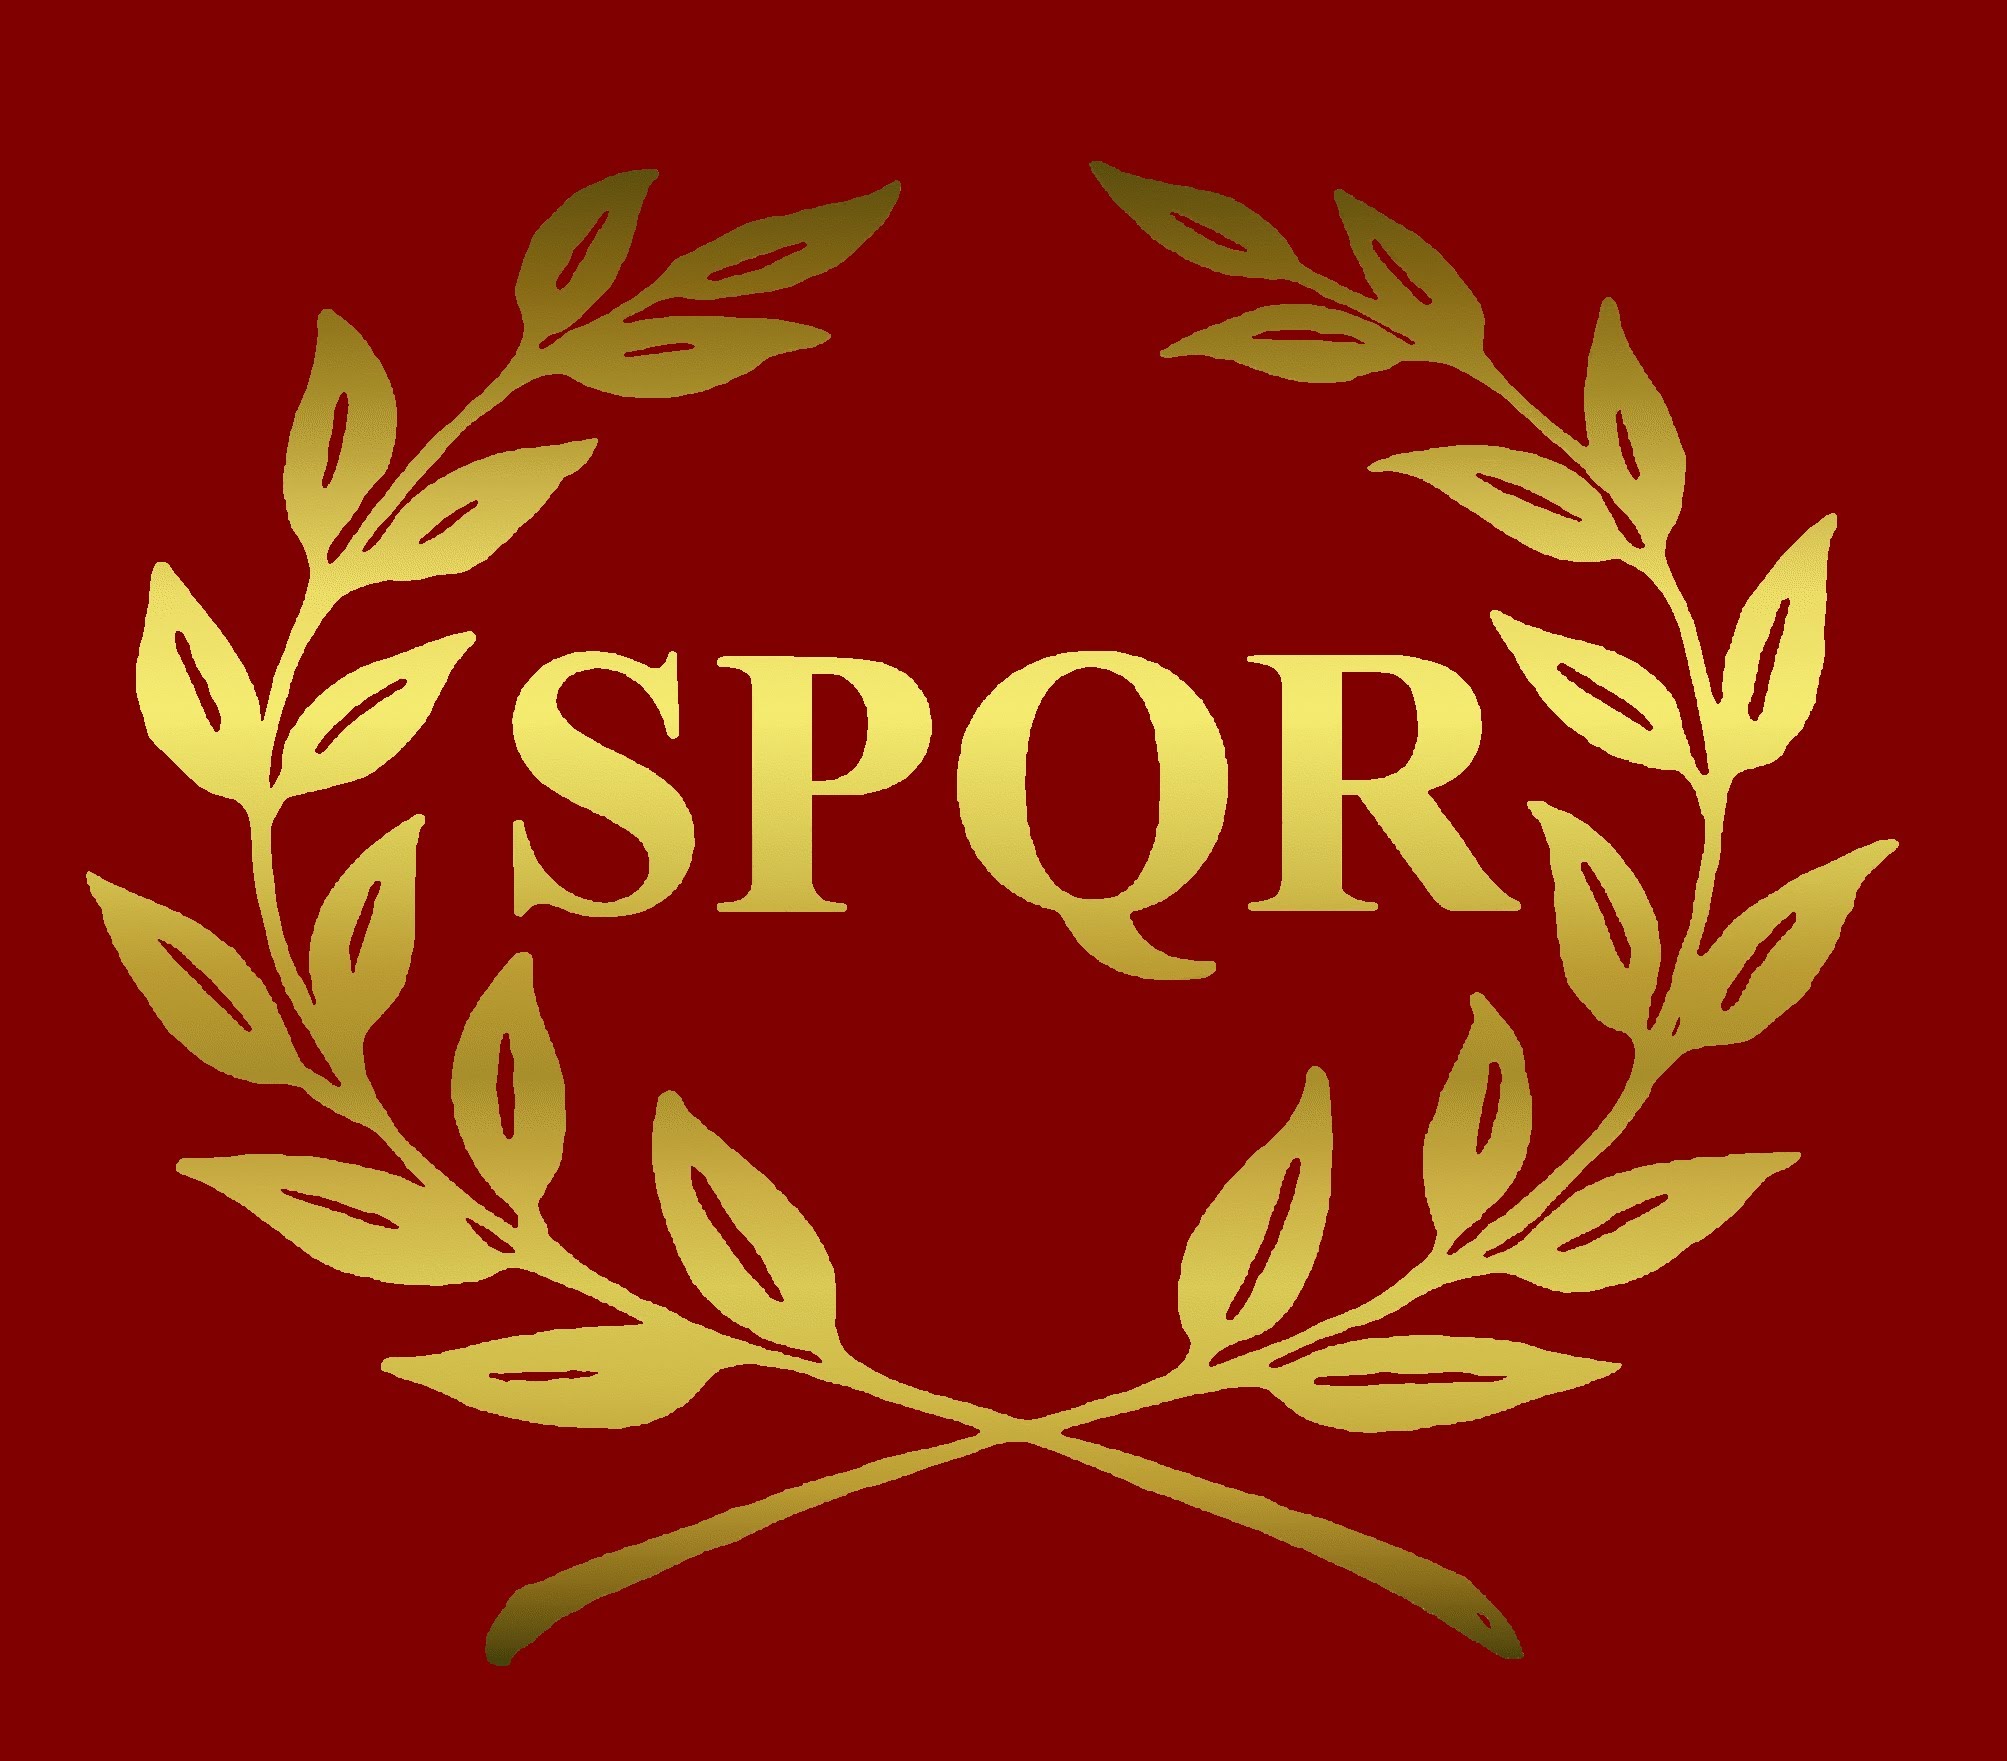 ancient roman government symbol